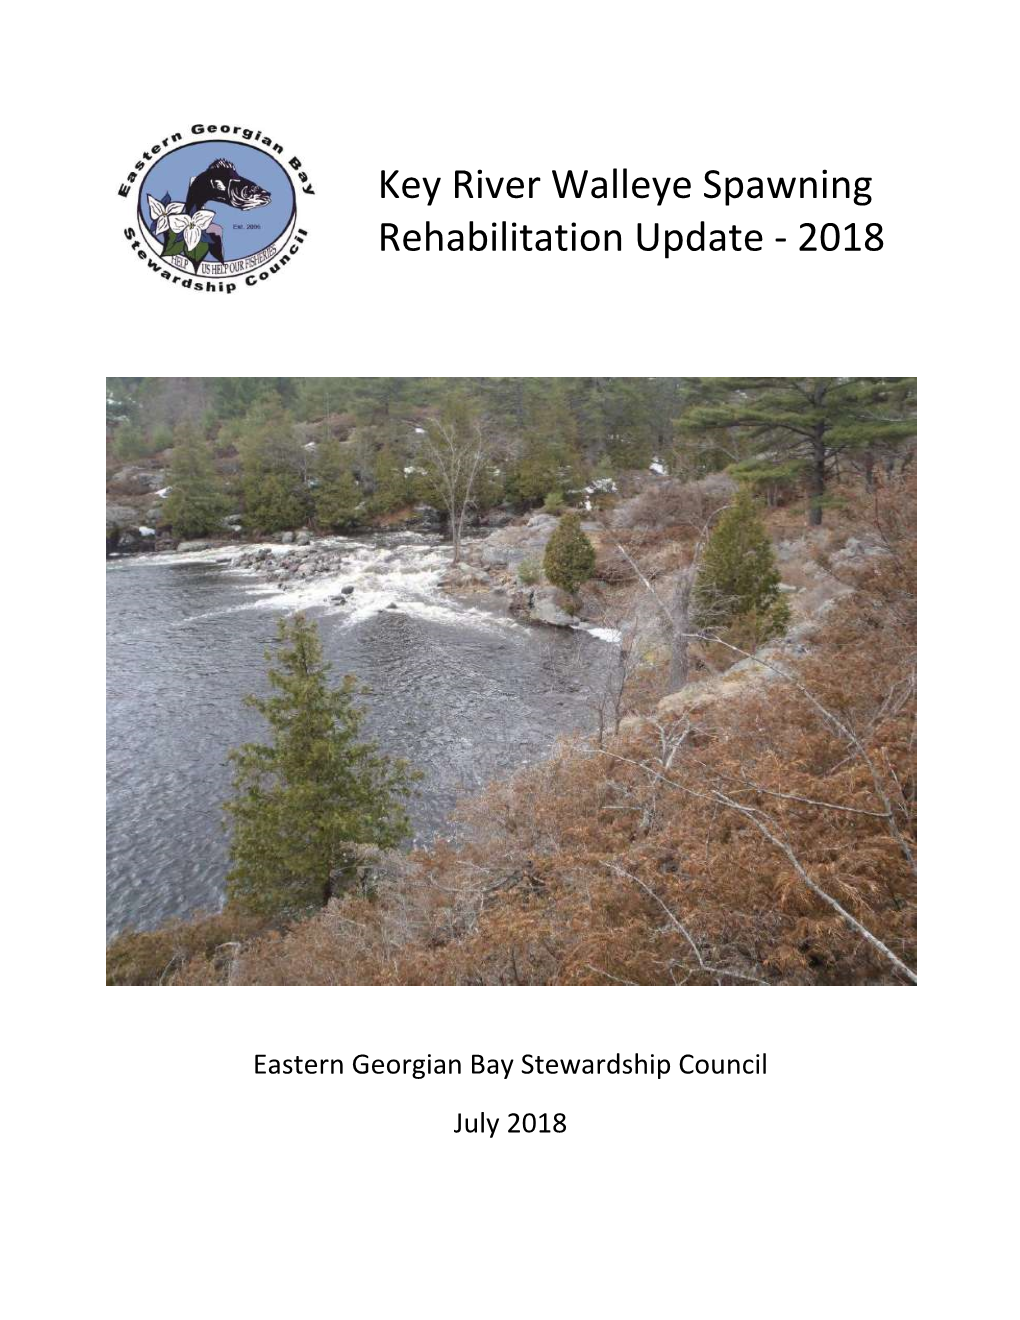 Key River Walleye Spawning Bed Rehabilitation Update 2018